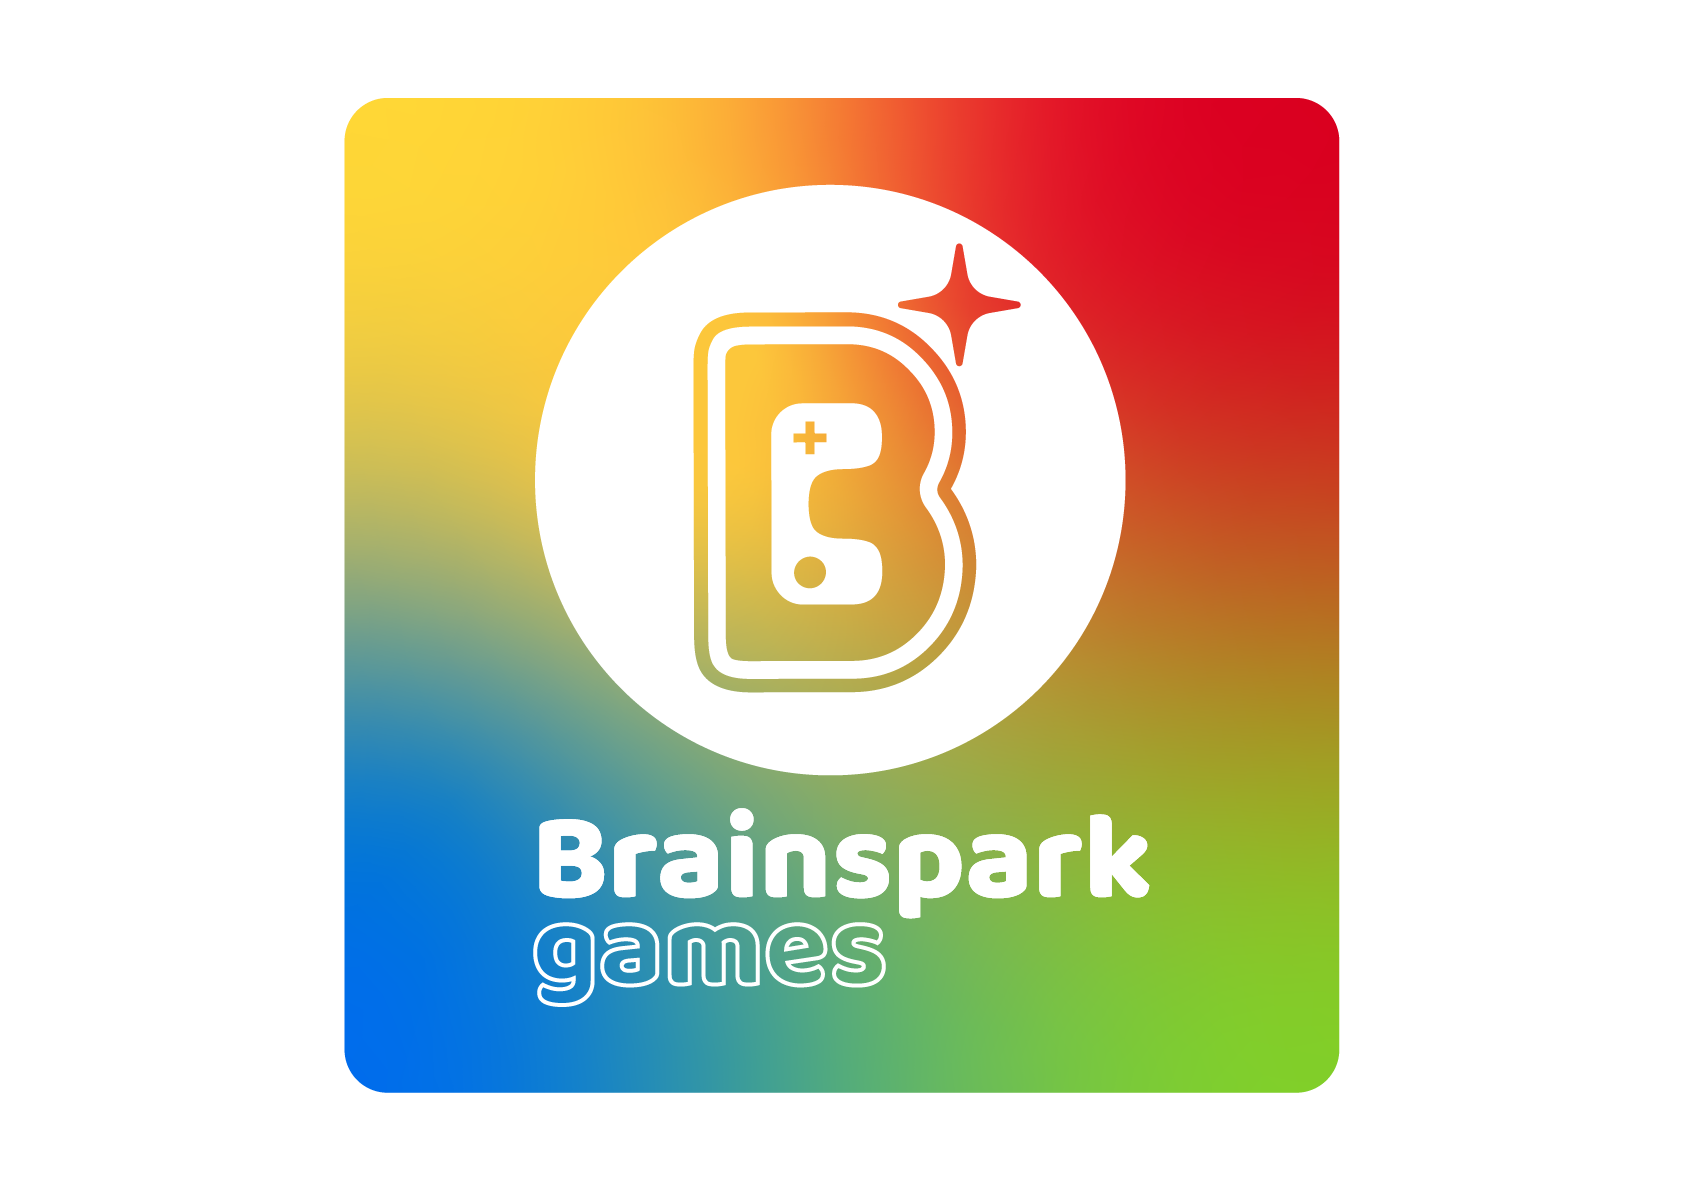 Brainspark